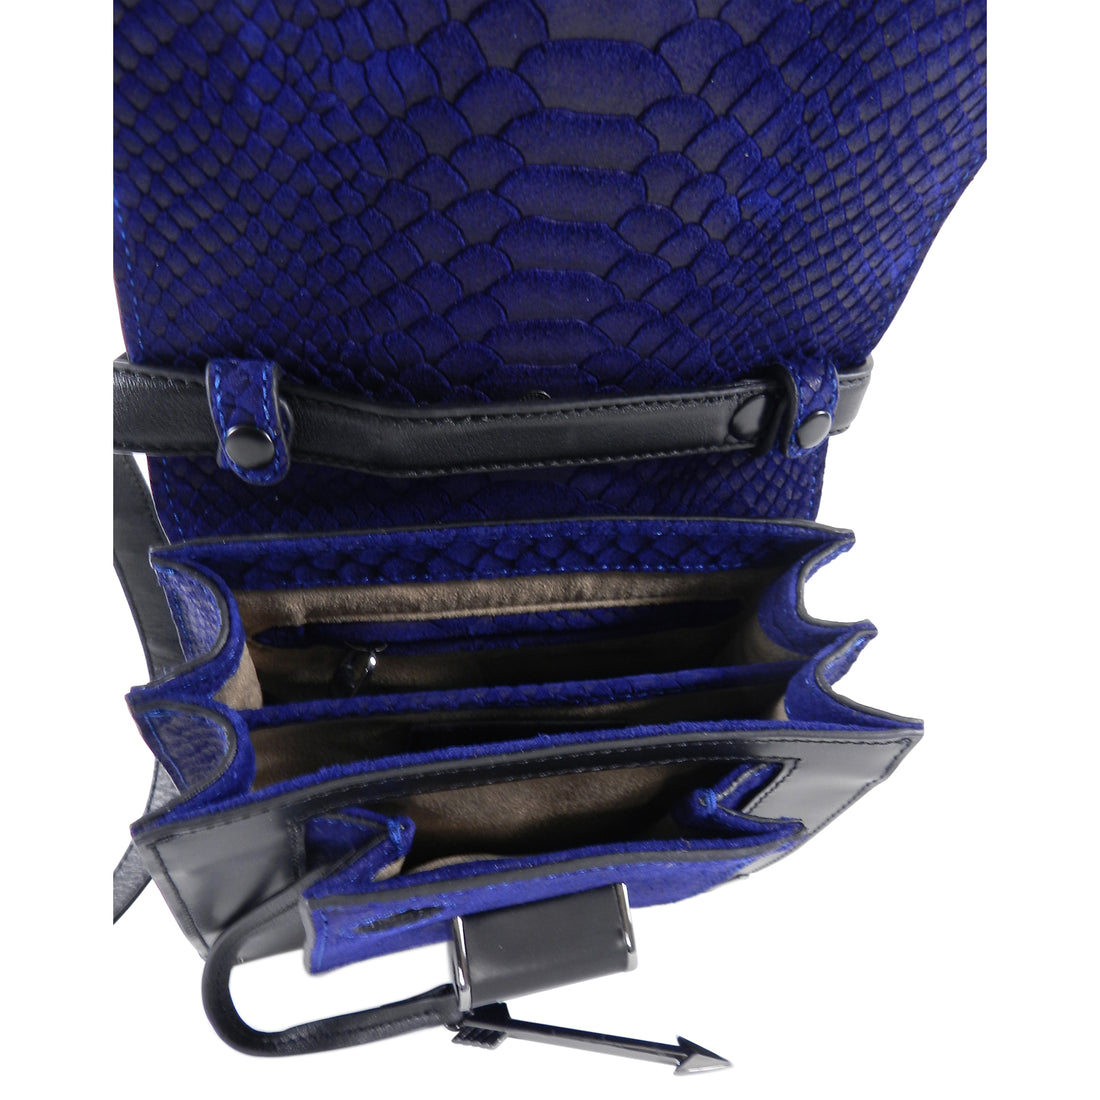 Mackage Mini Rubie Black and Cobalt Blue Crossbody Bag